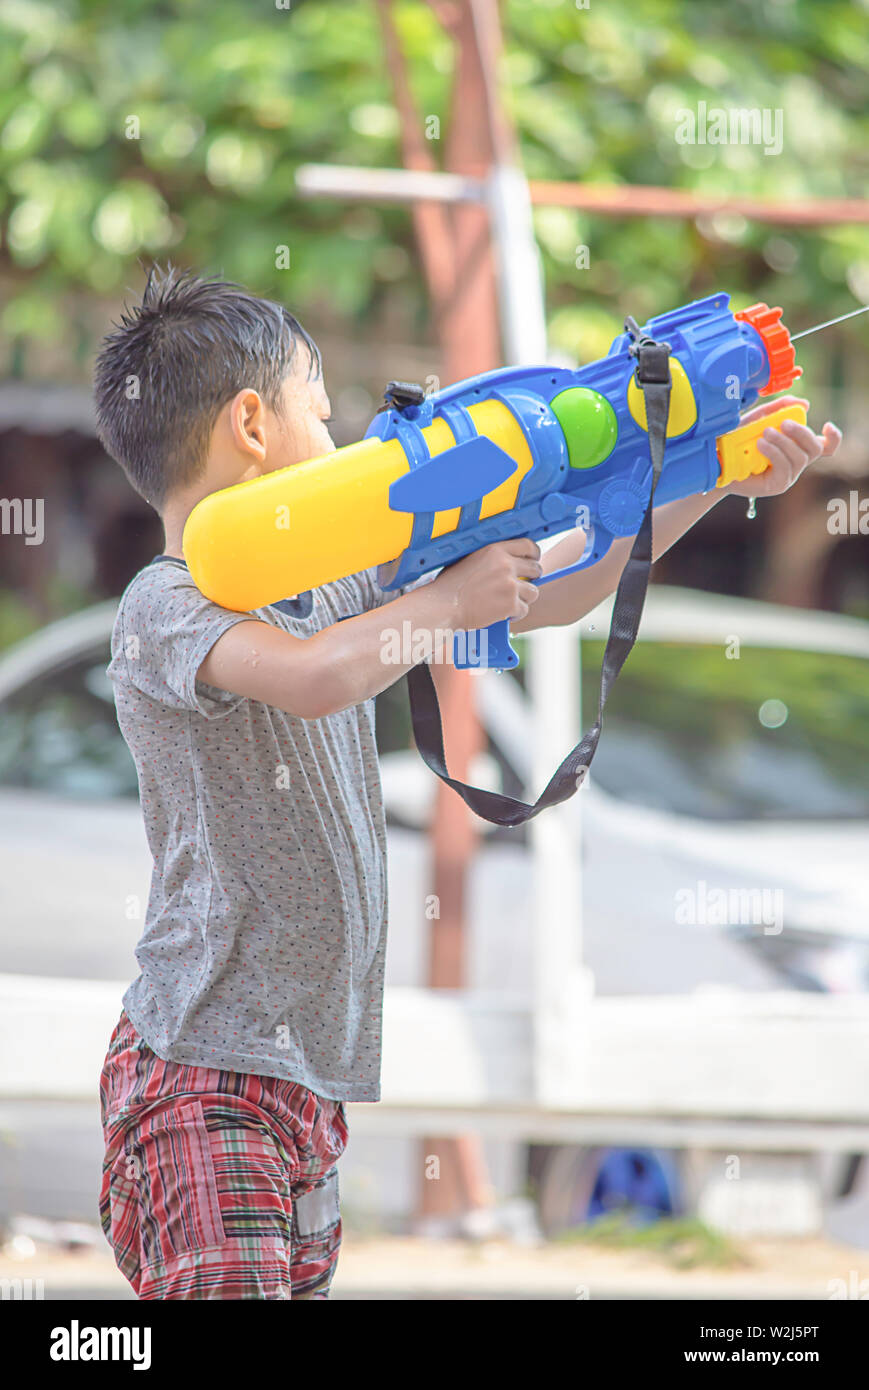 Asian boy holding a water gun play Songkran festival or Thai new year in Thailand. Stock Photo